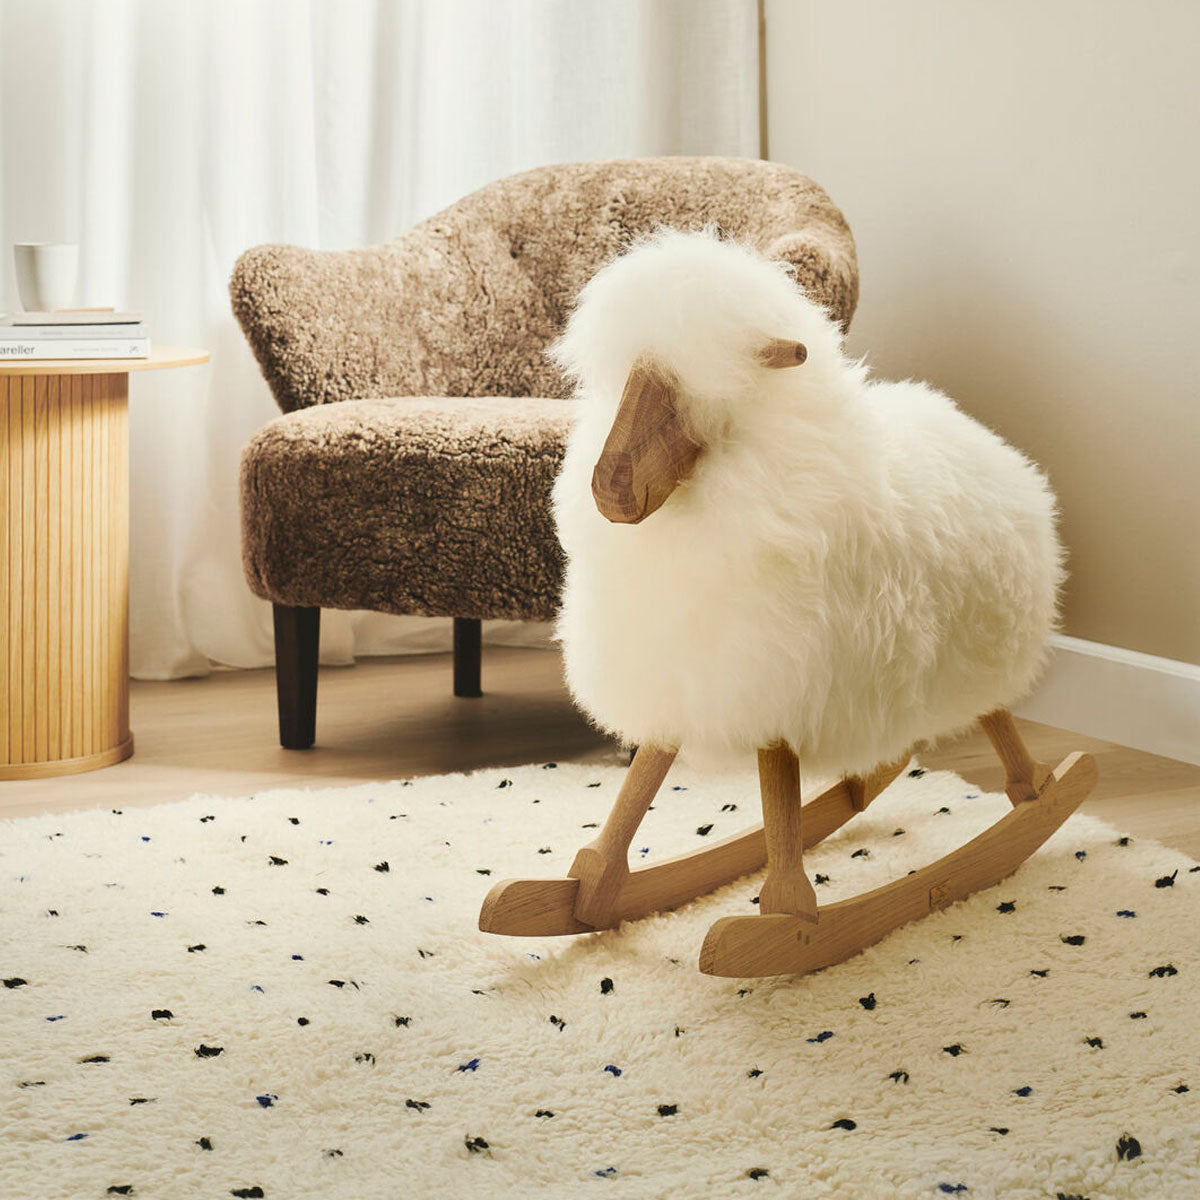 The Rocking Sheep │ Povl Kjer Design │ Made in Denmark │ Natural White Long Wool │ Large